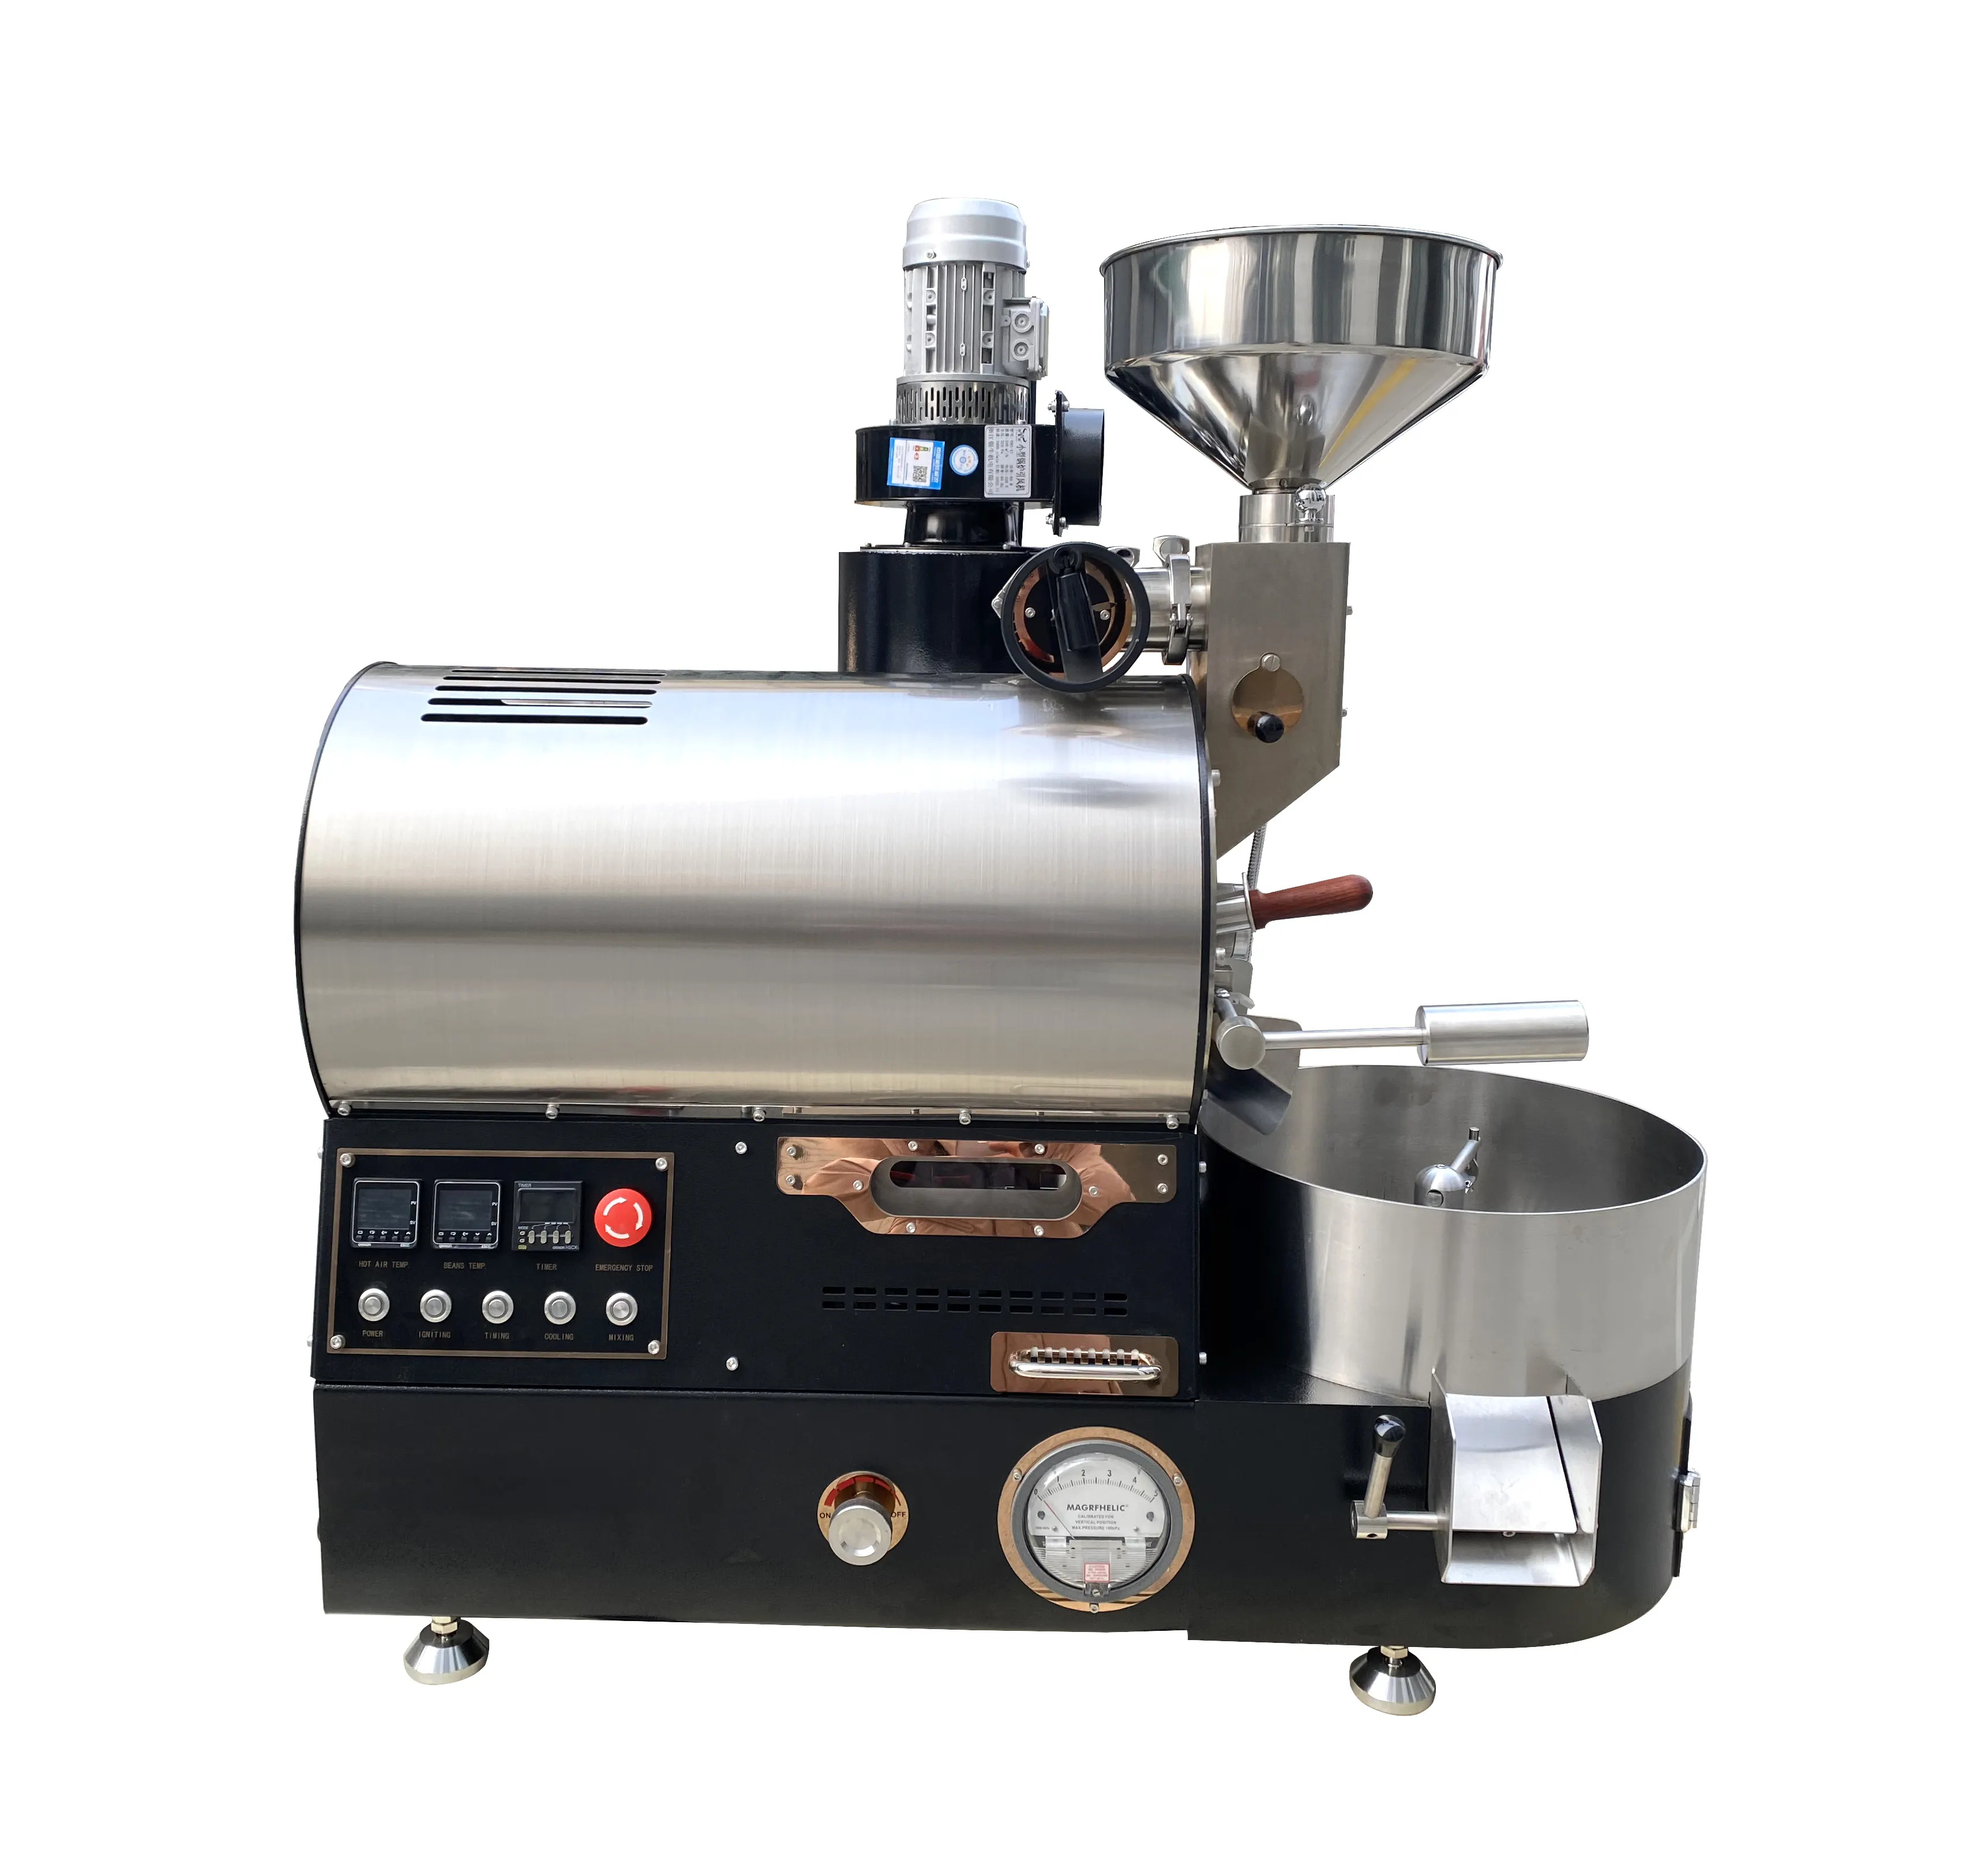 Wintop Commercial Coffee Roaster Máquina de granos de café tostado a gas para uso doméstico